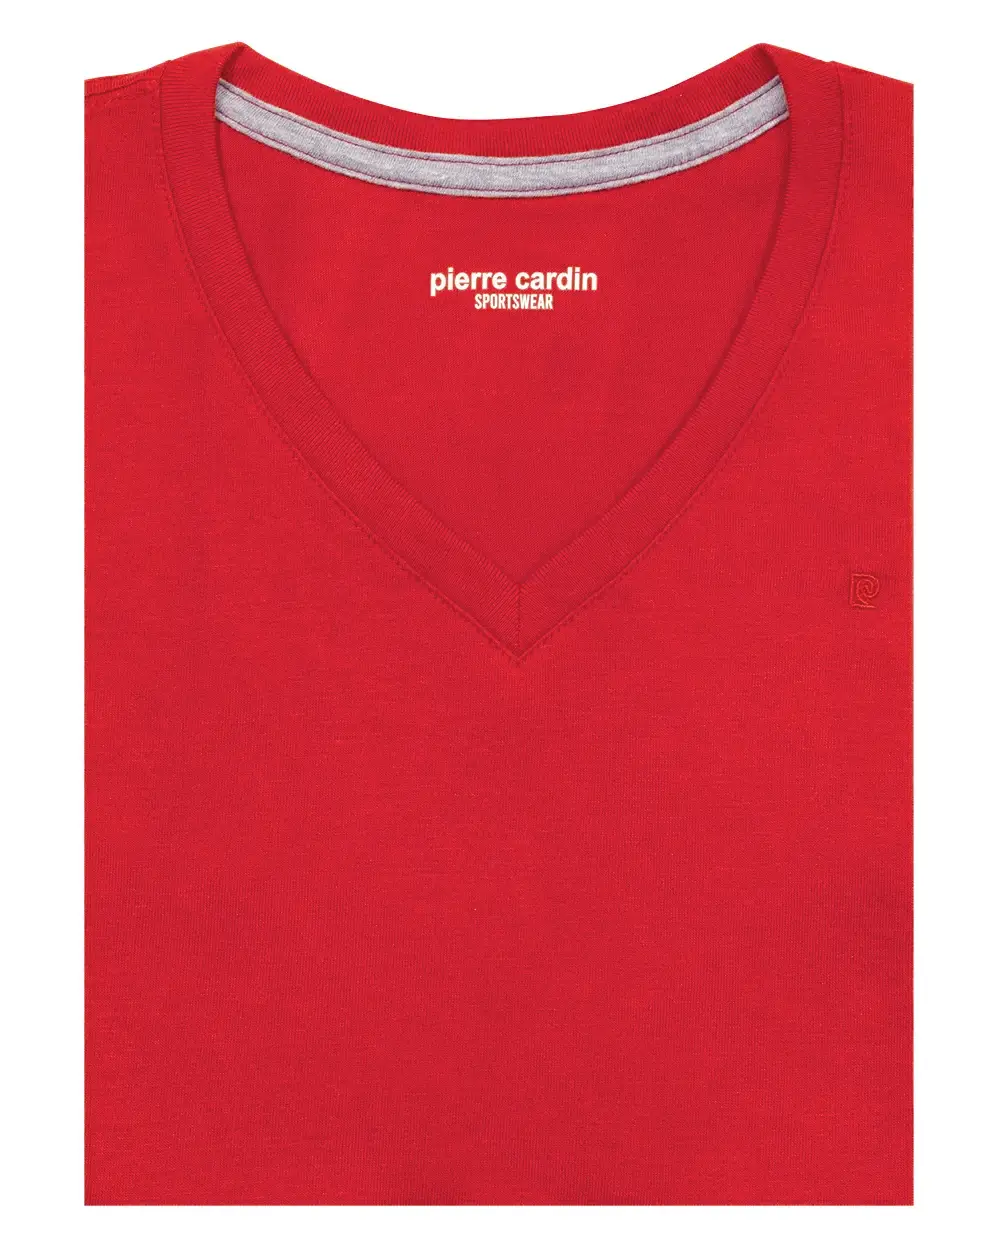 Camiseta lisa cuello v manga corta roja